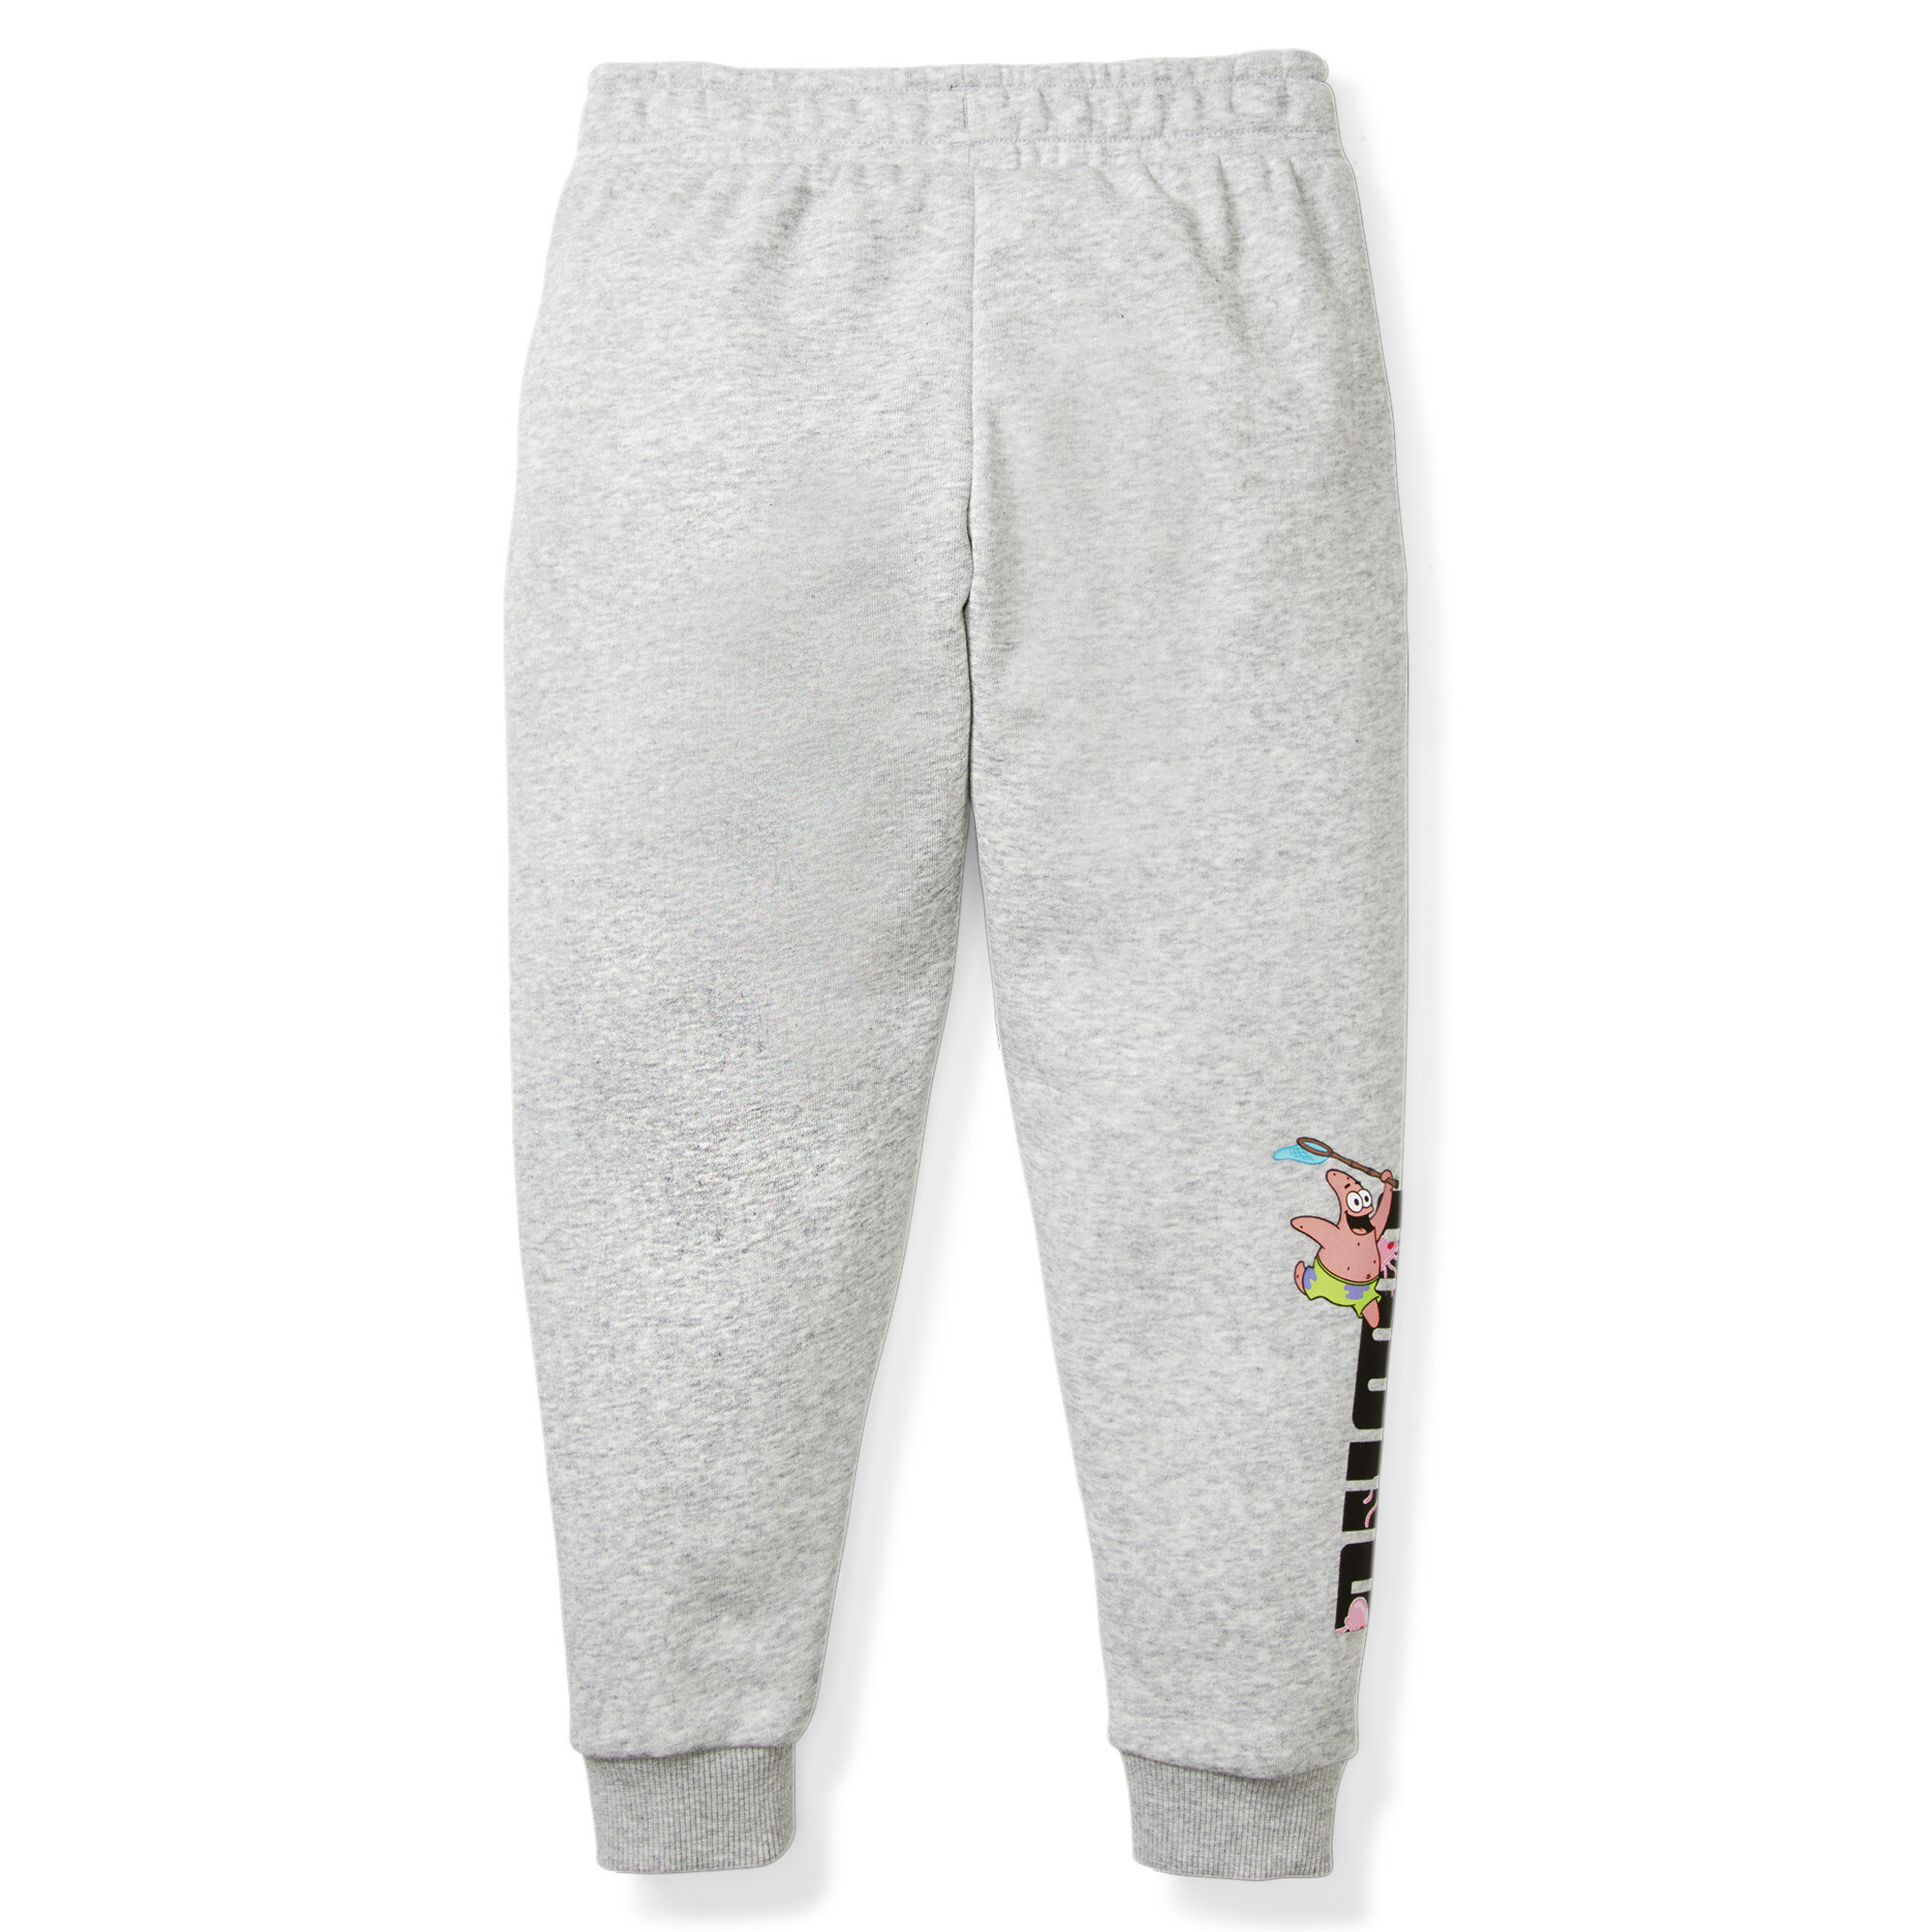 Puma X SPONGEBOB Sweatpants Kids, Gray, Size 15-16Y, Clothing